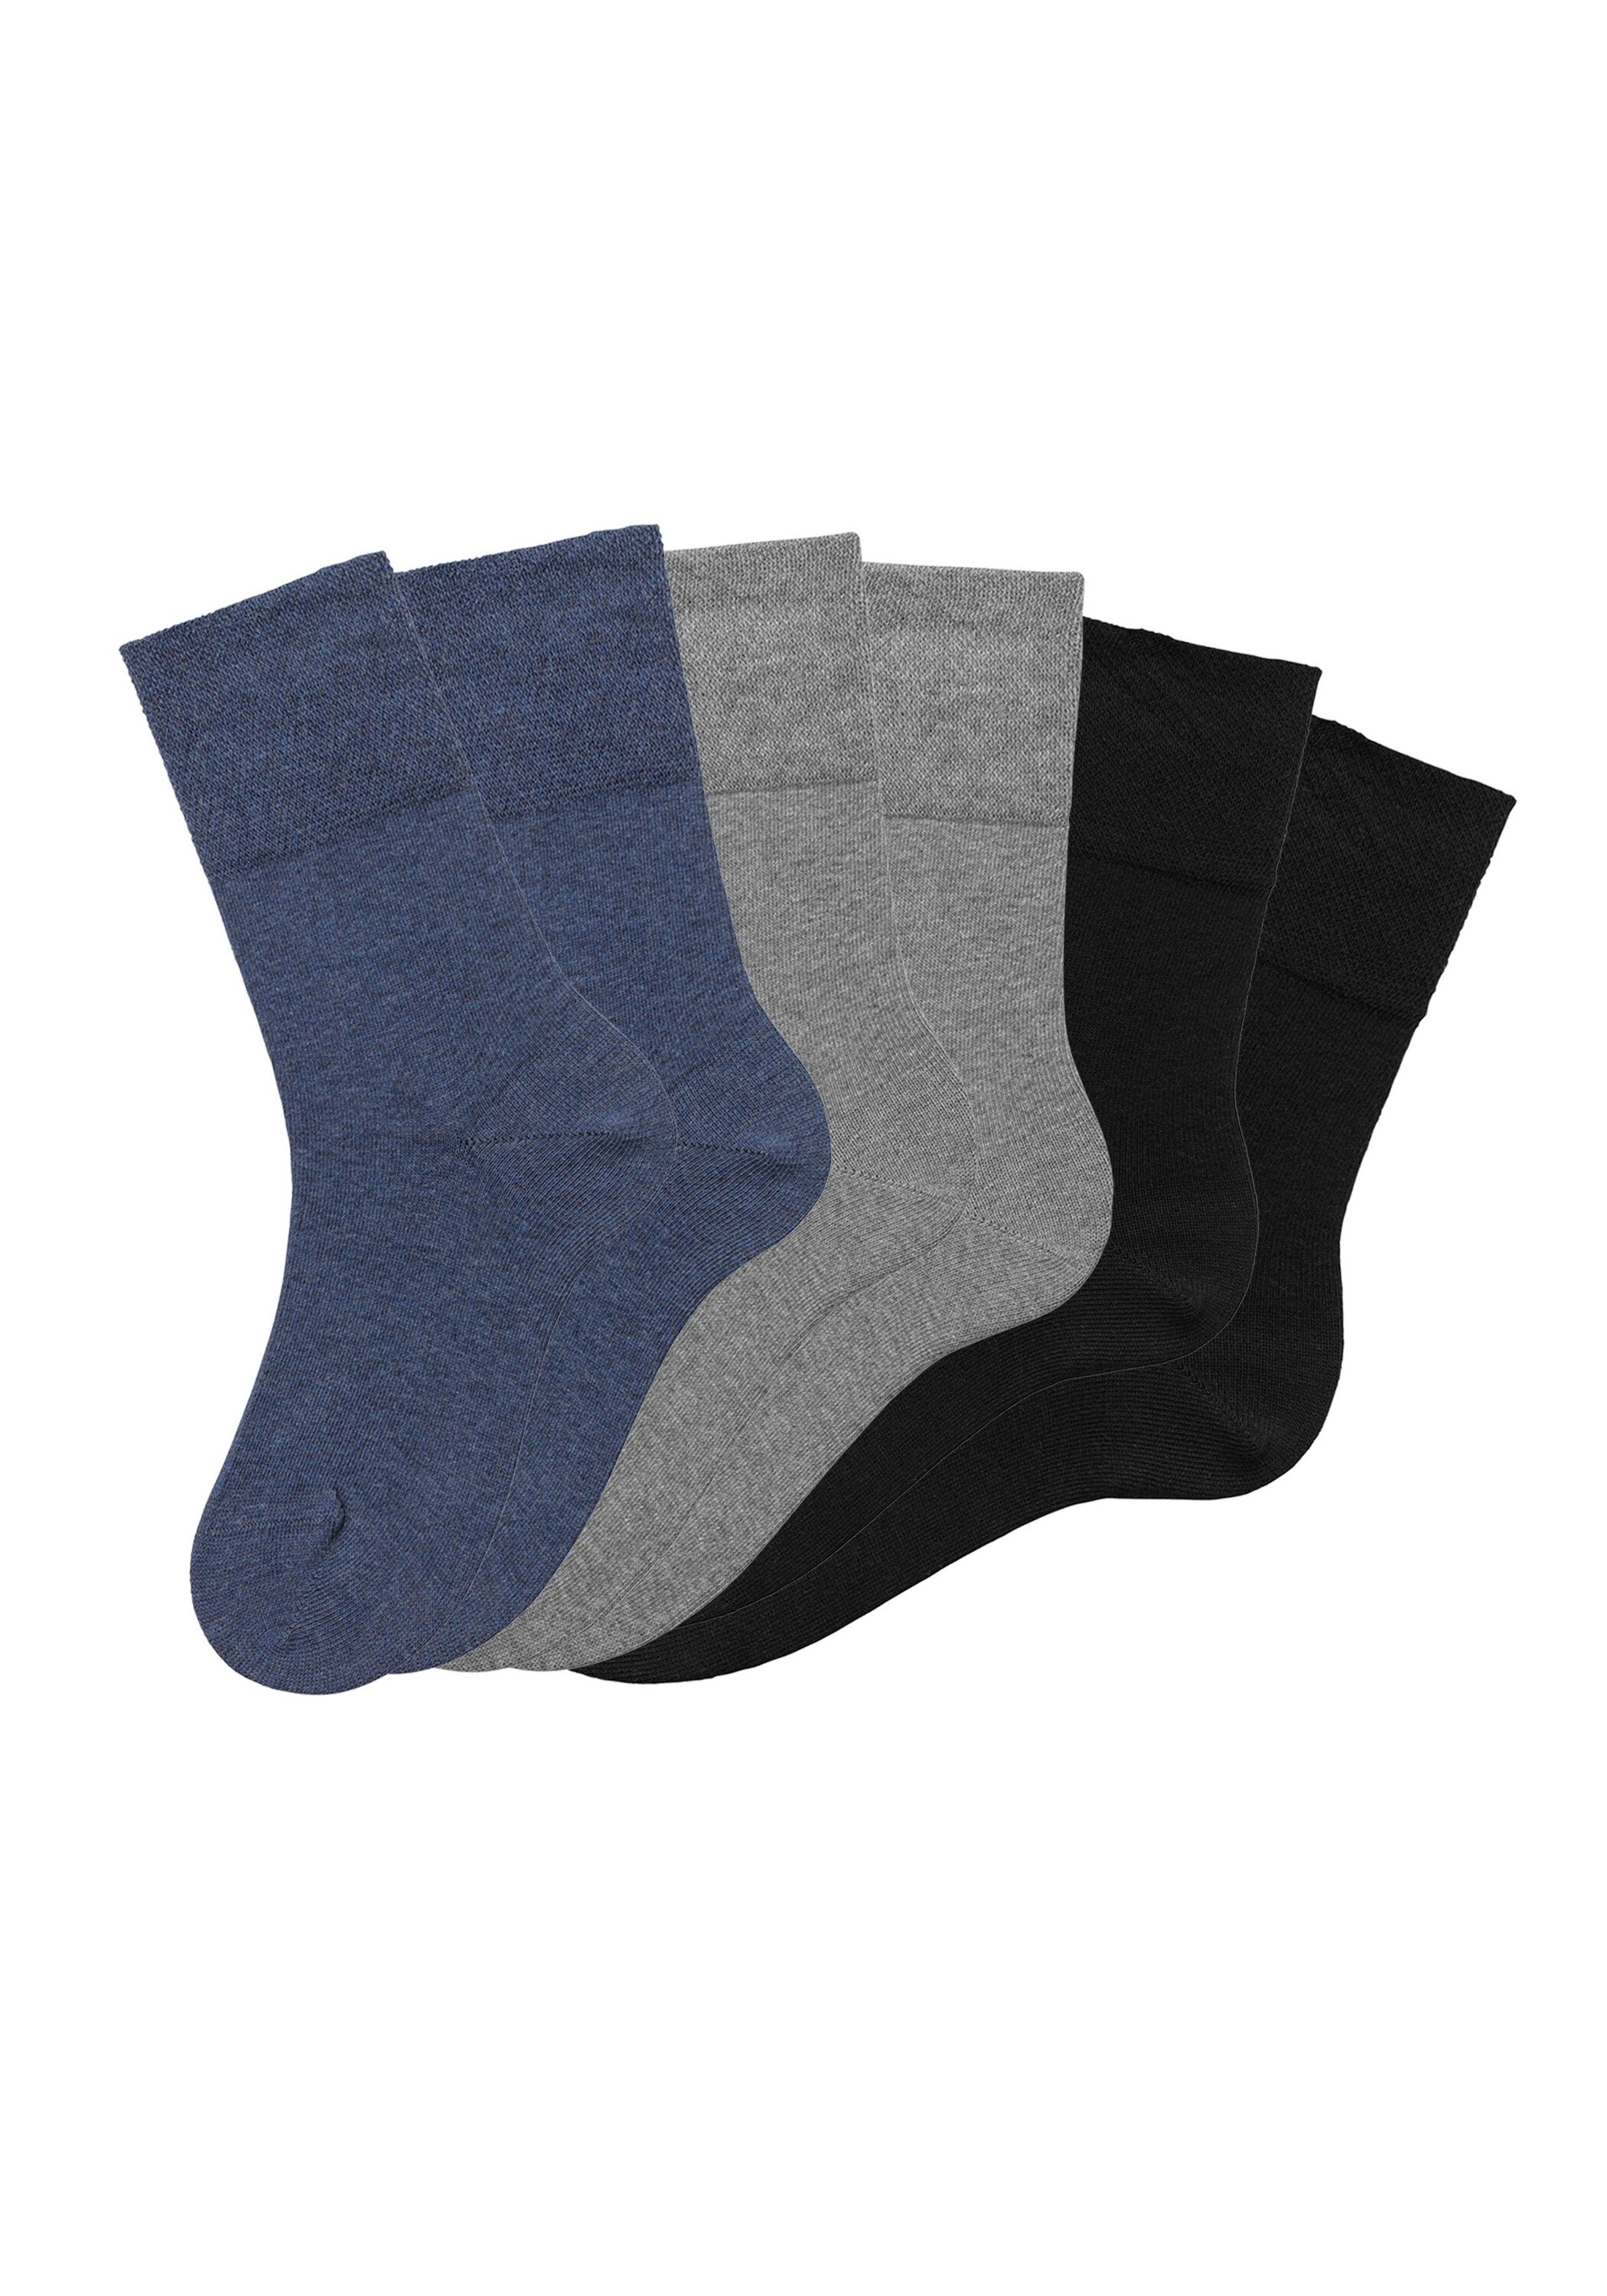 Носки H.I.S, цвет 2x jeans, 2x schwarz, 2x grau meliert носки bench sport цвет 2x schwarz 2x weiß 2x grau meliert